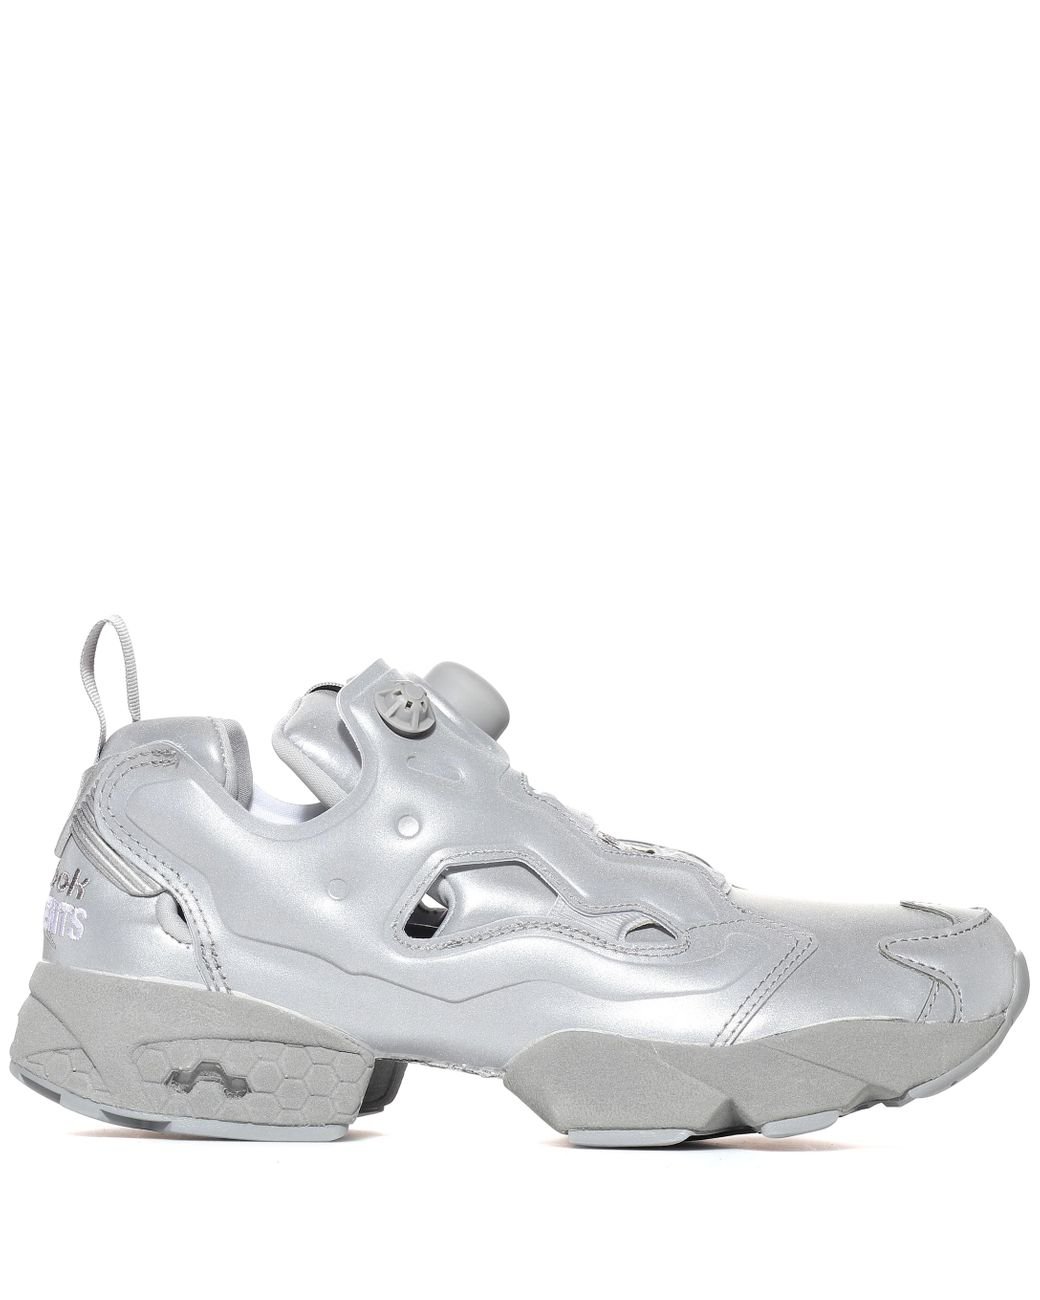 Vetements X Reebok Instapump Fury Sneakers in Silver (Metallic) | Lyst